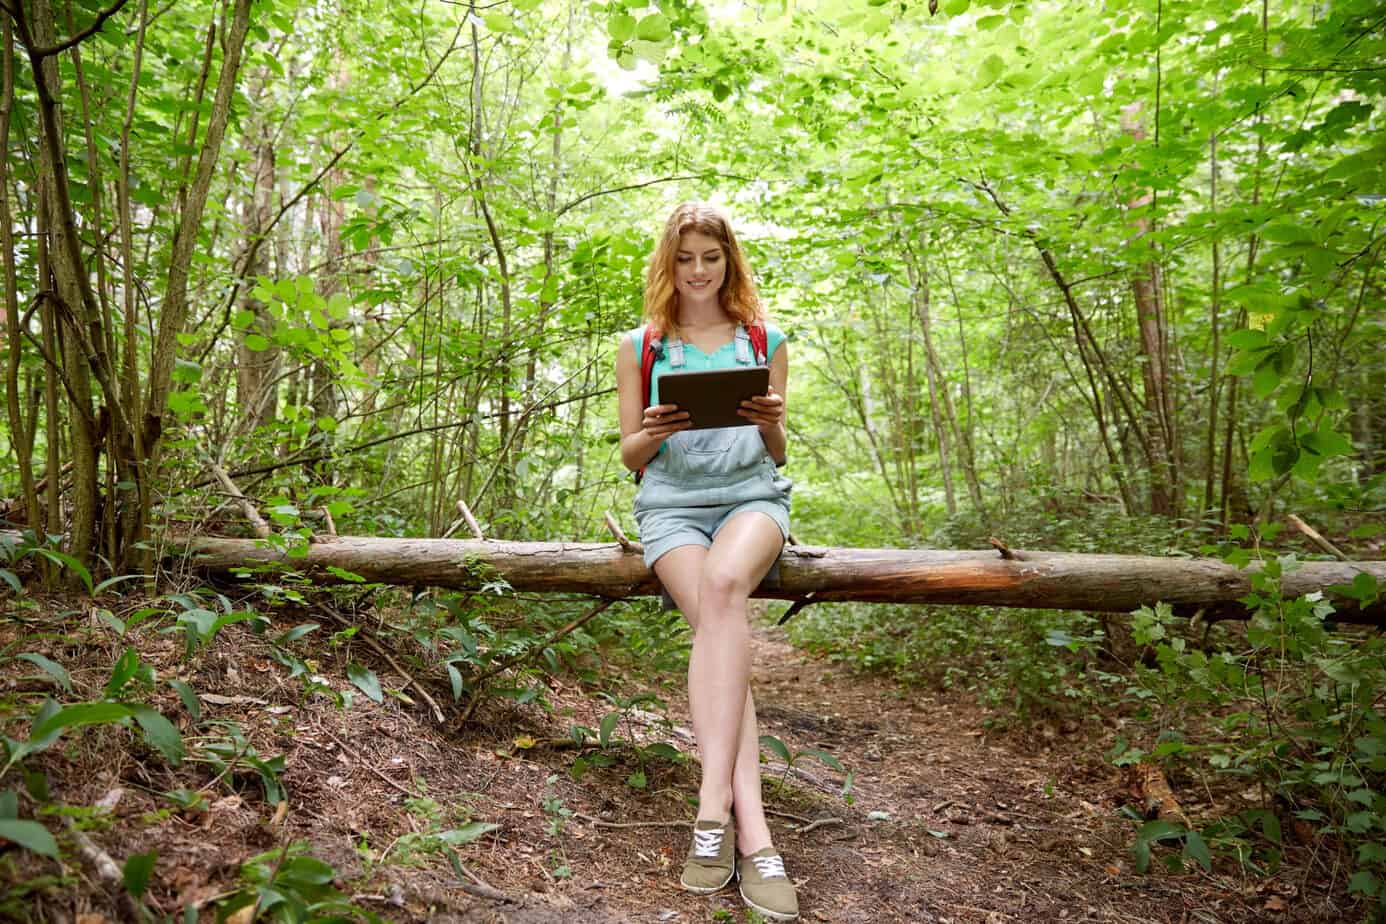 She s in the park. Джейн стоунвуд. Фотосессия в лесу девушка турист. Немного outdoors. Woman in Woods.